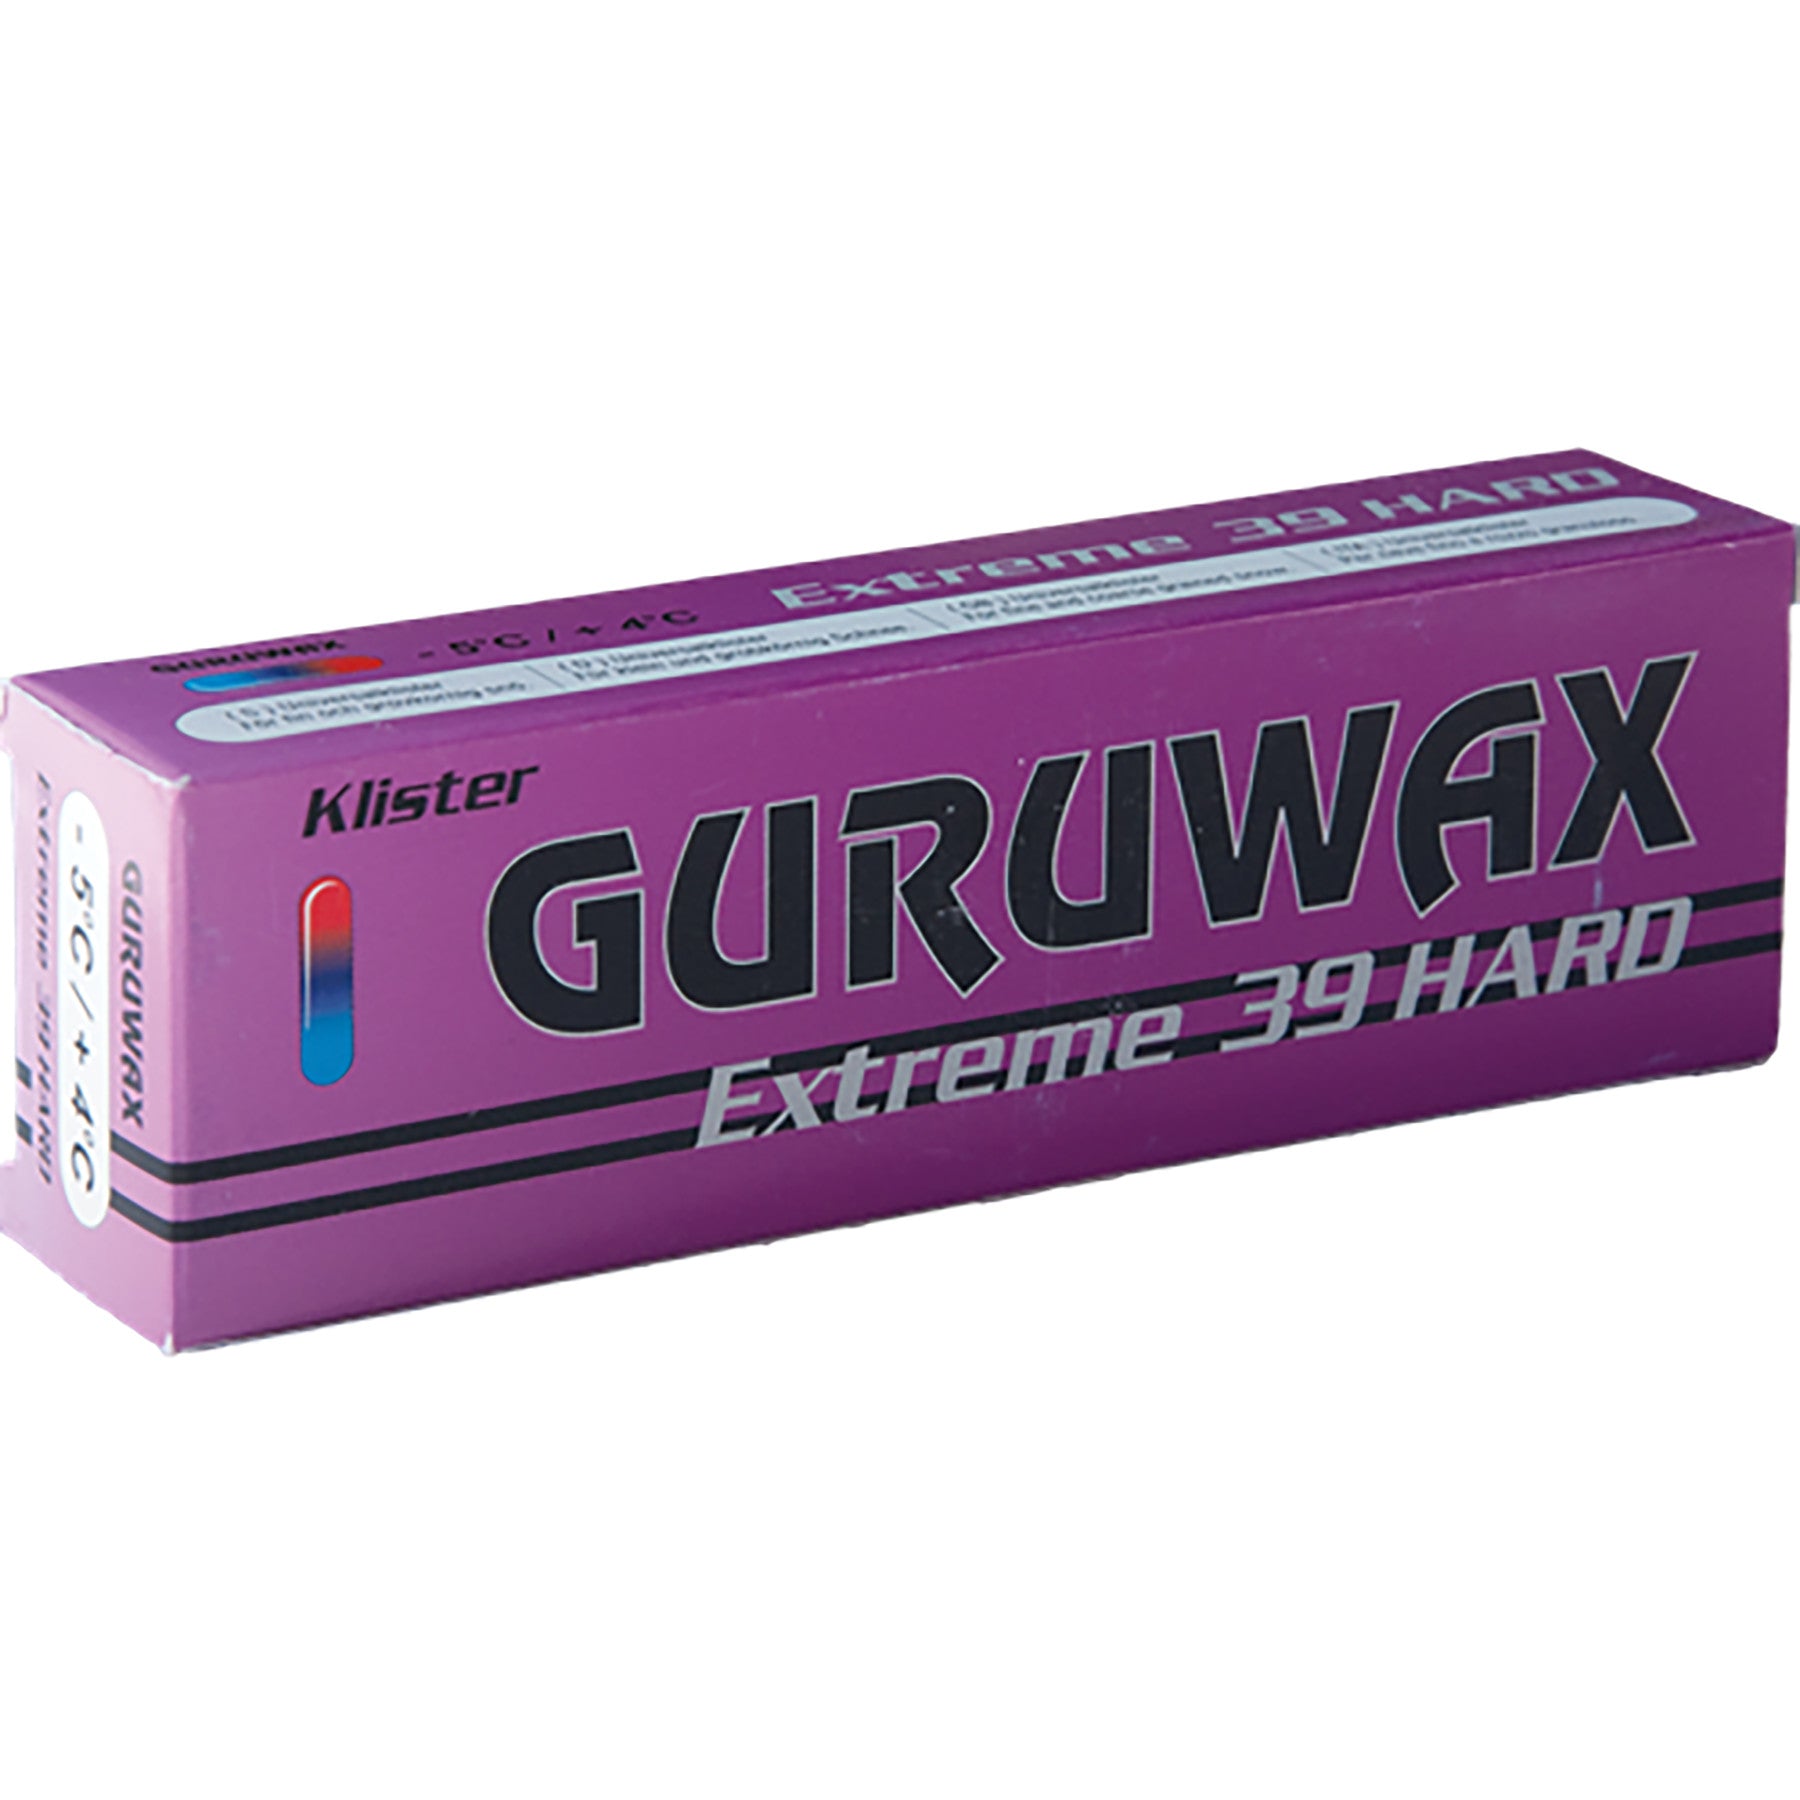 Buy extreme-39-hard Guru Klister